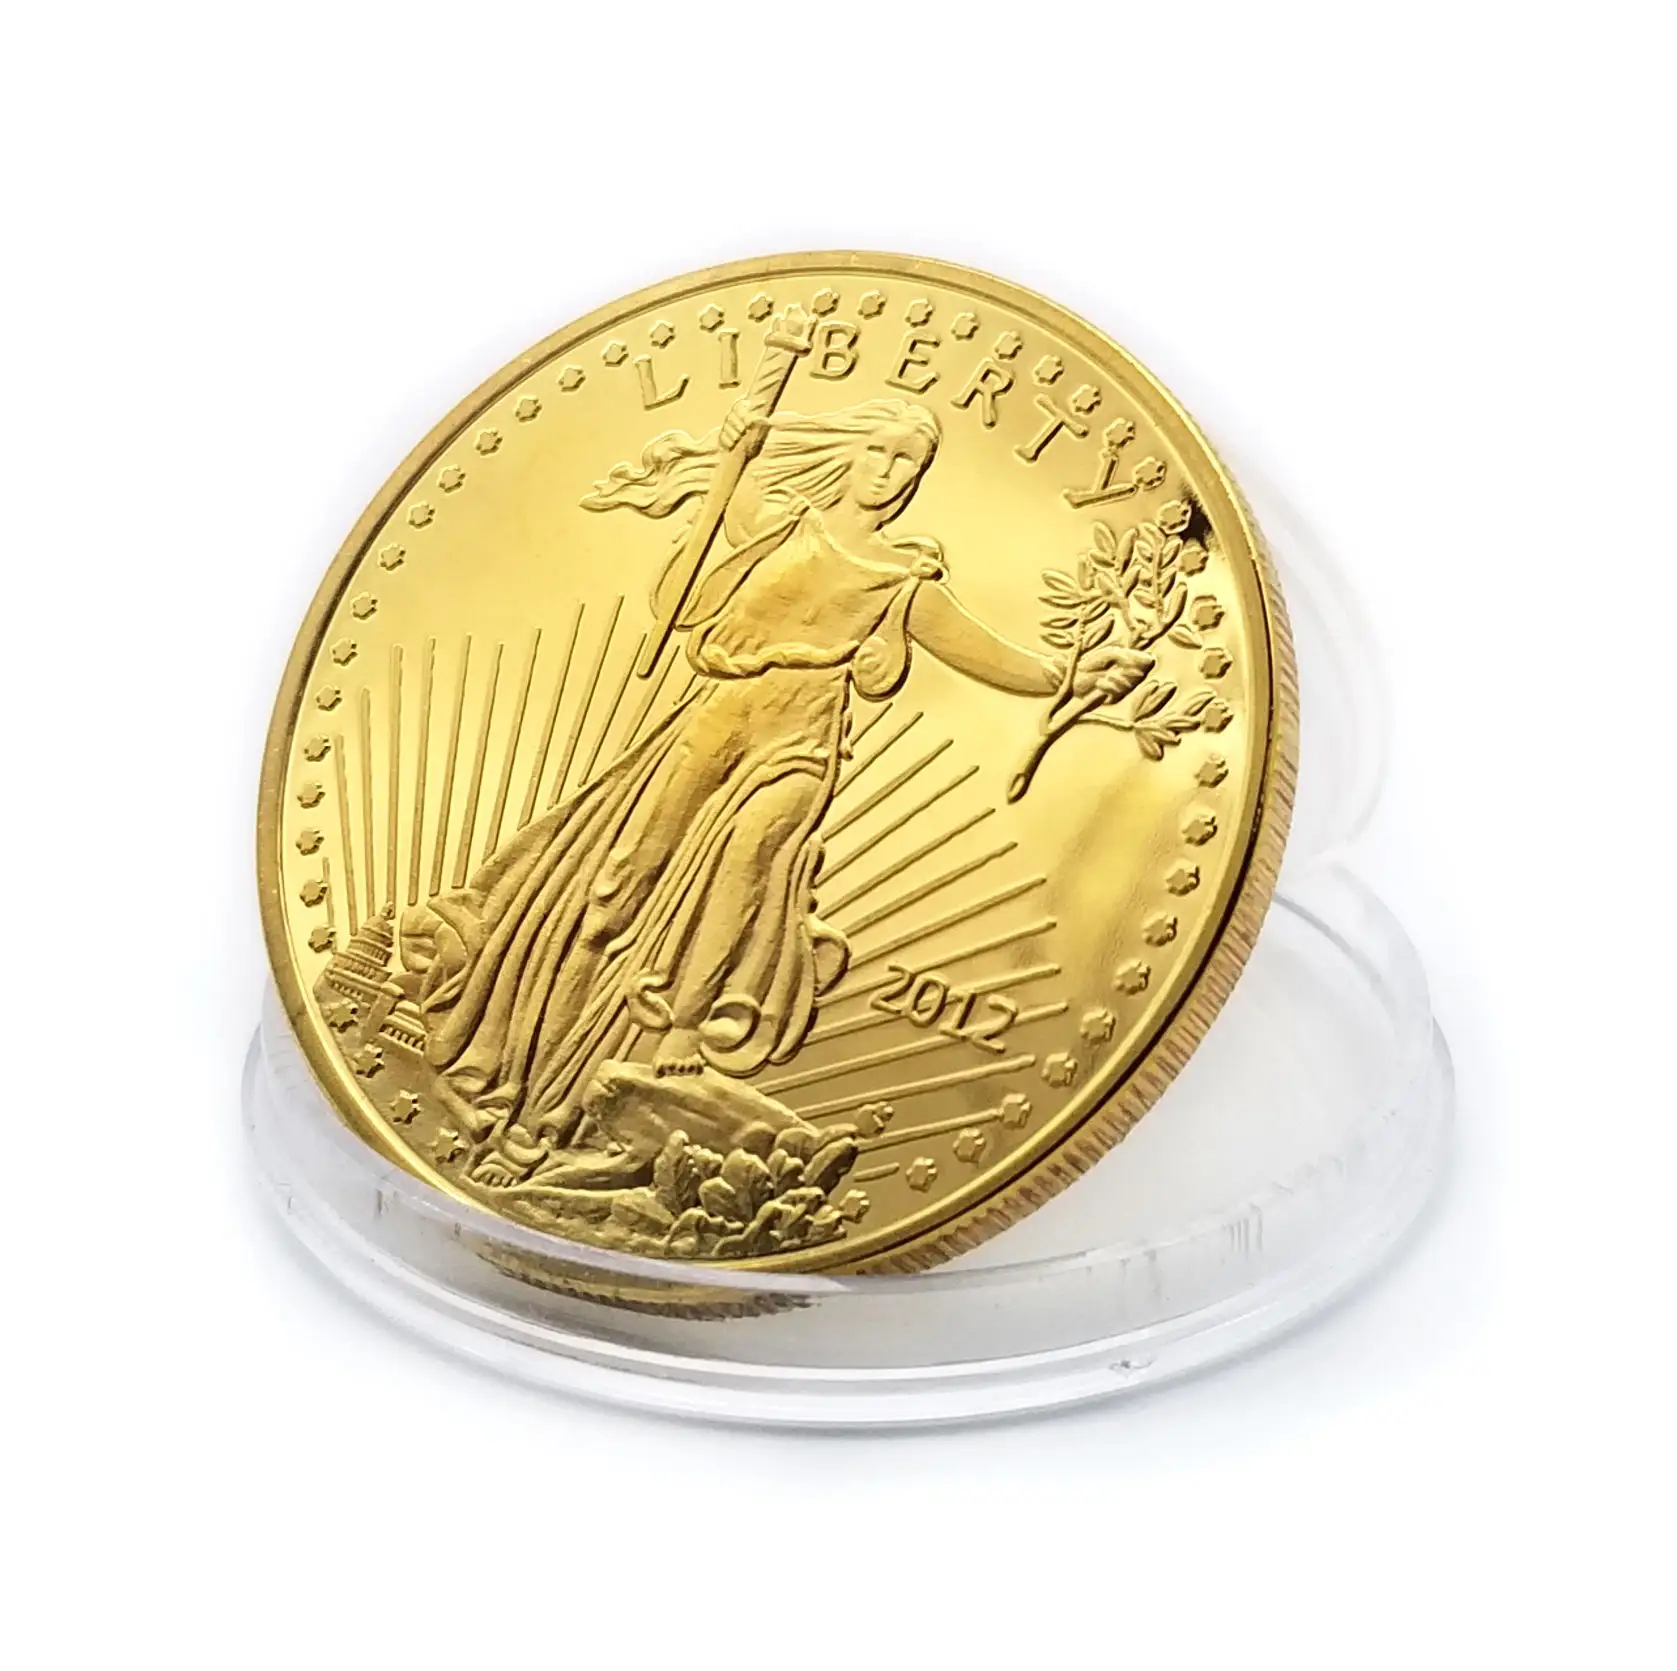 OEMクォーターイーグル1オンスゴールド記念レプリカコインアメリカのタングステンゴールドシルバーダブルイーグルusコイン